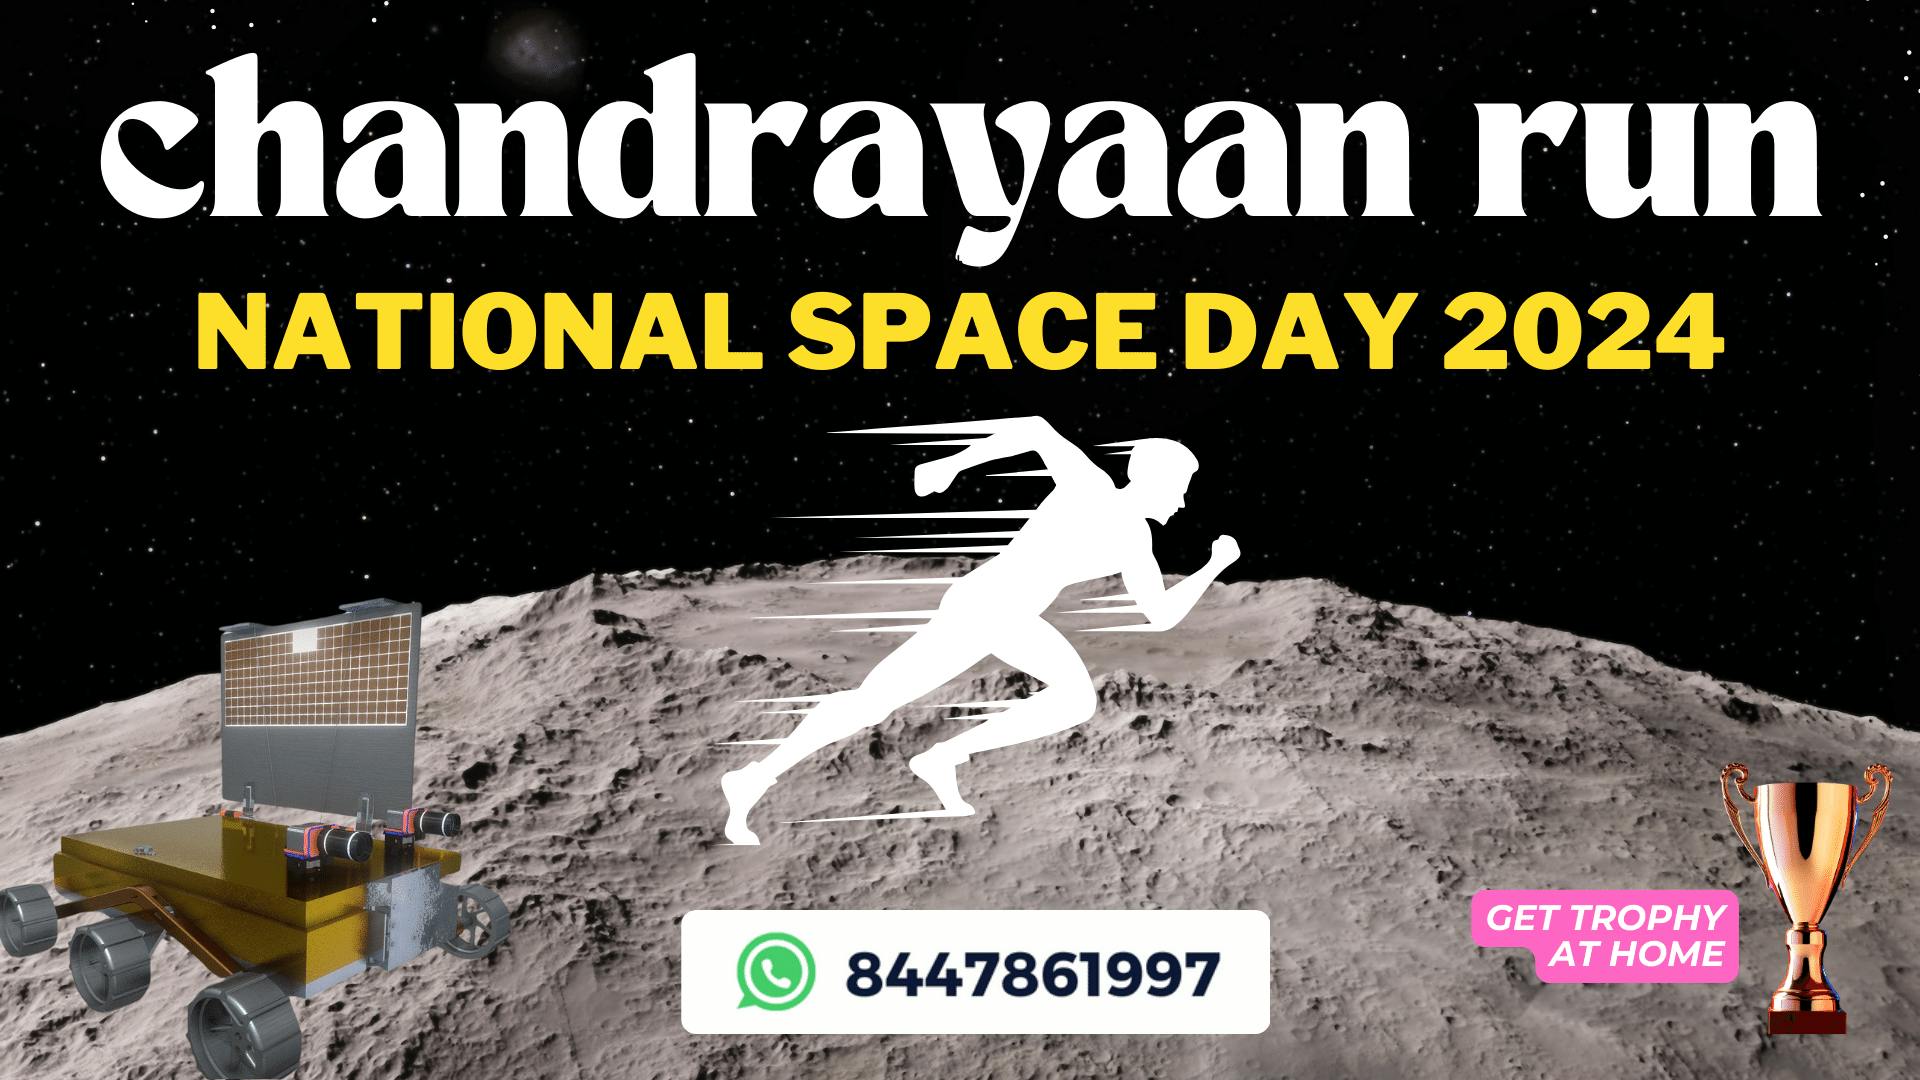 Chandrayaan Run - National Space Day 2024